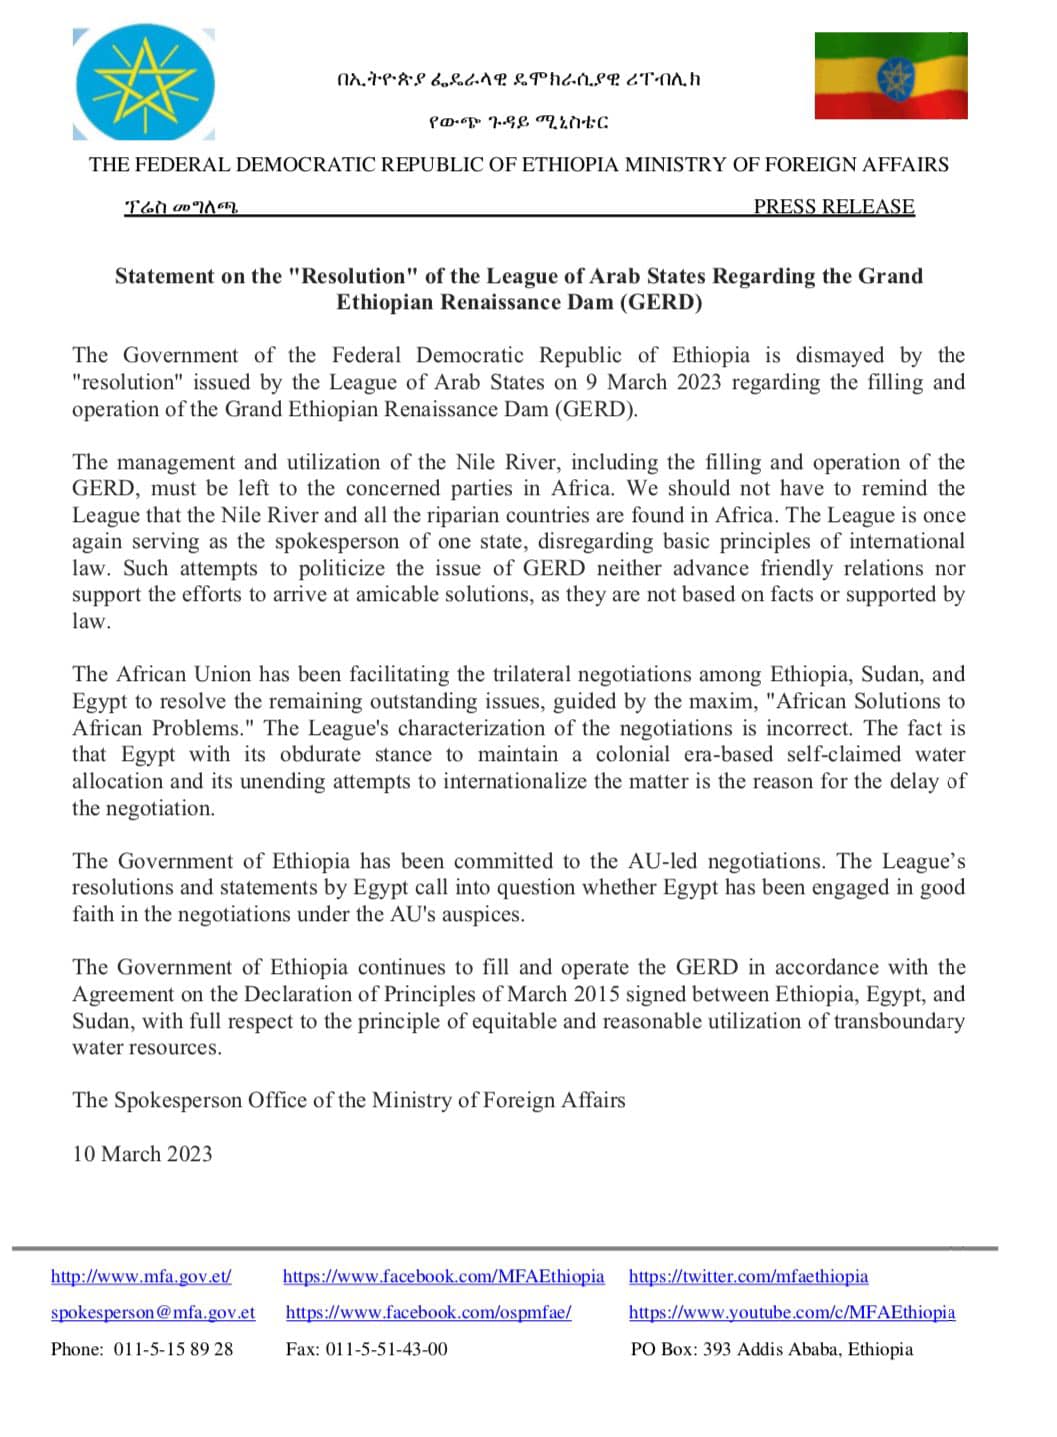 Statement on the “Resolution” of the League of Arab States Regarding the Grand Ethiopian Renaissance Dam (GERD) #Ethiopia